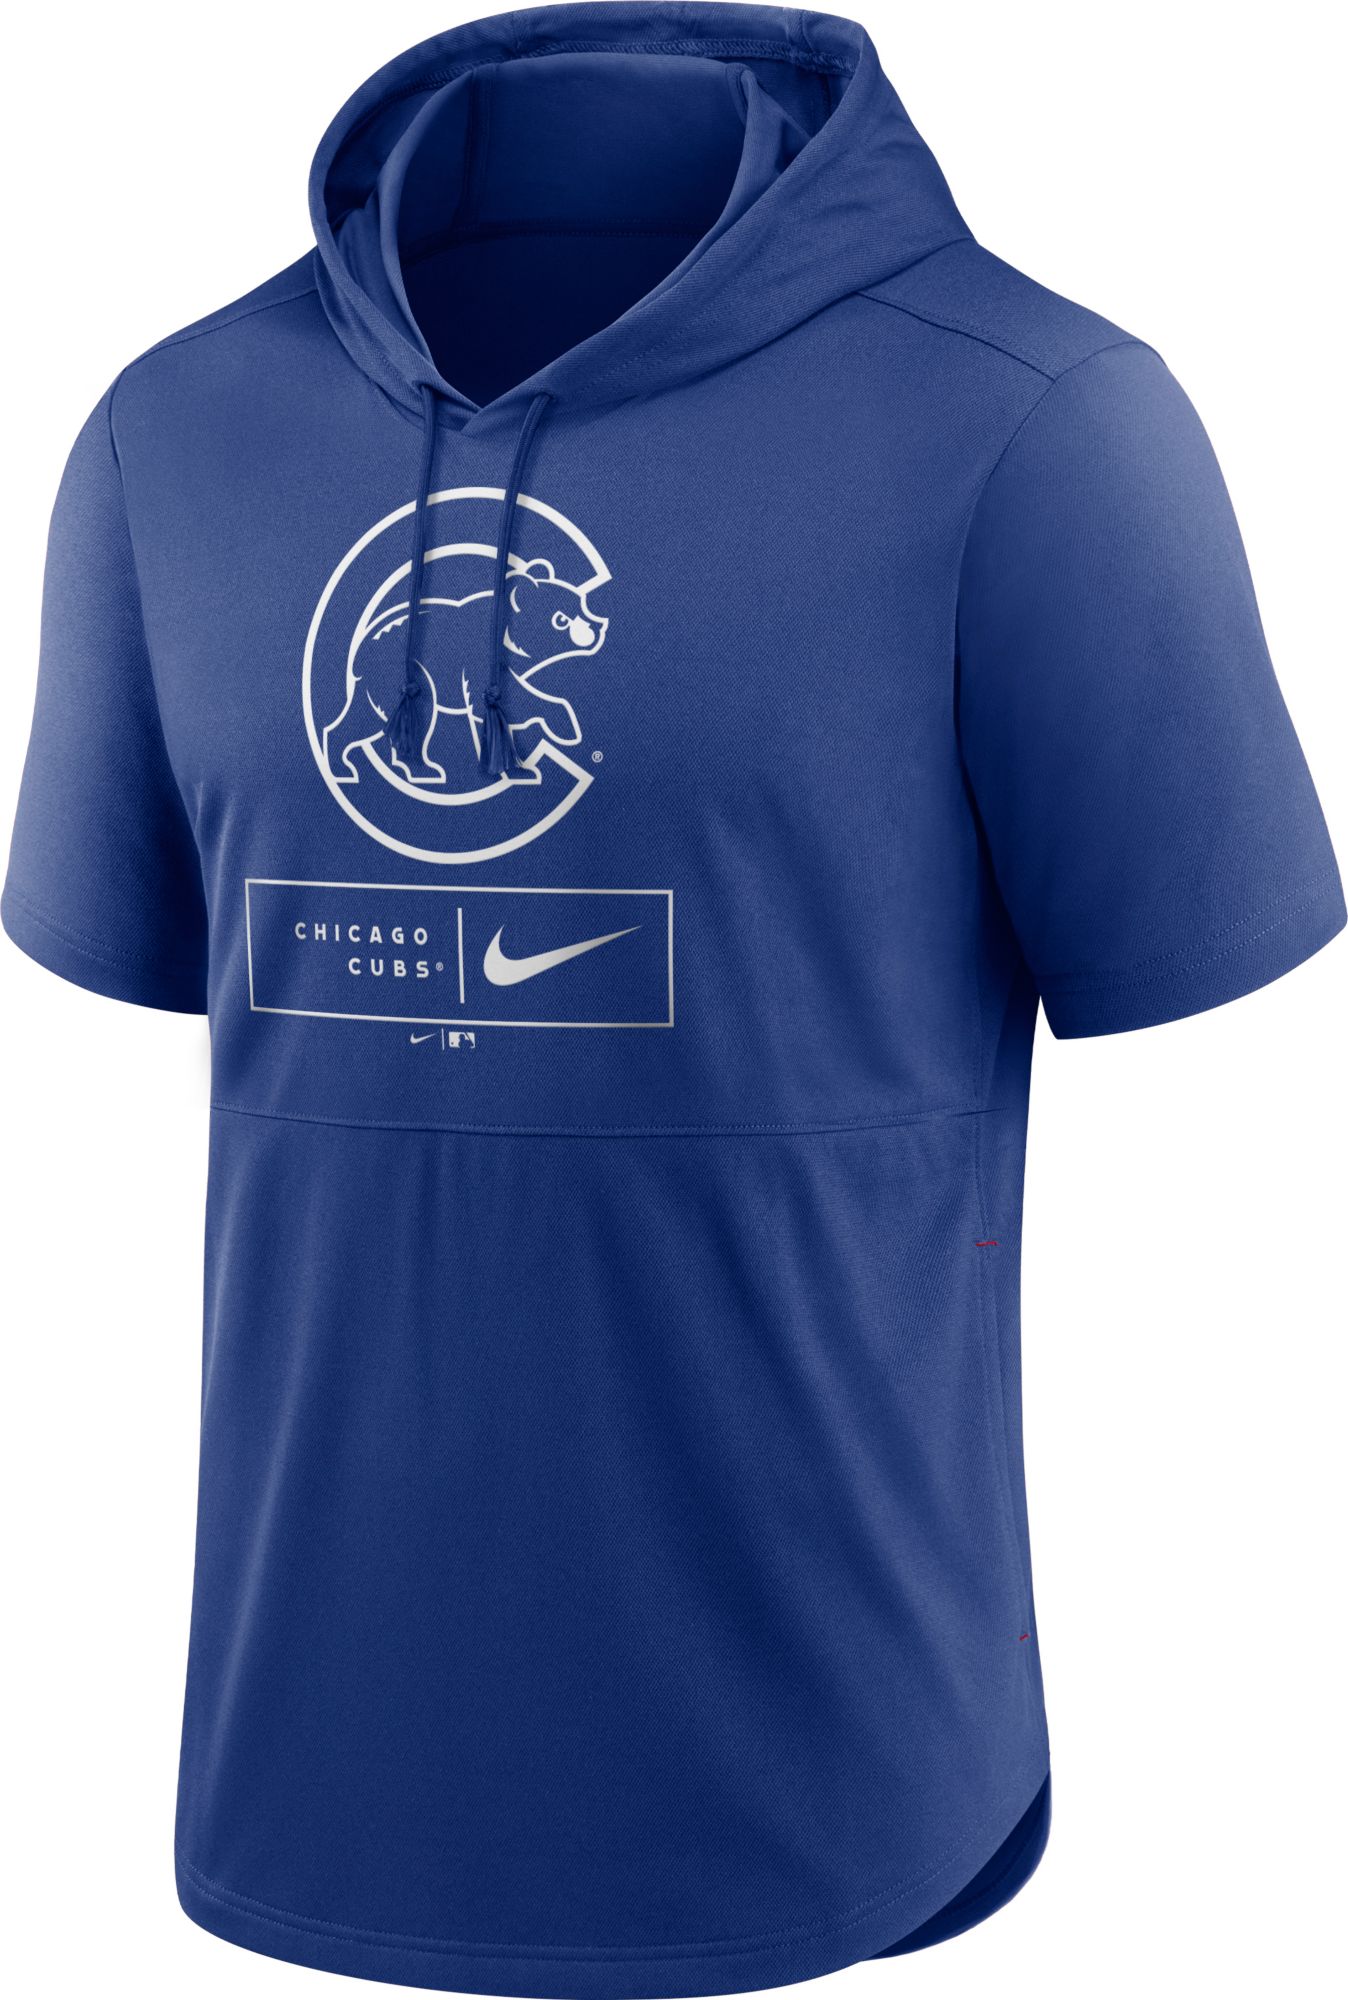 Men's Champion Gray Creighton Bluejays Icon Logo Basketball Jersey Long Sleeve T-Shirt Size: Small